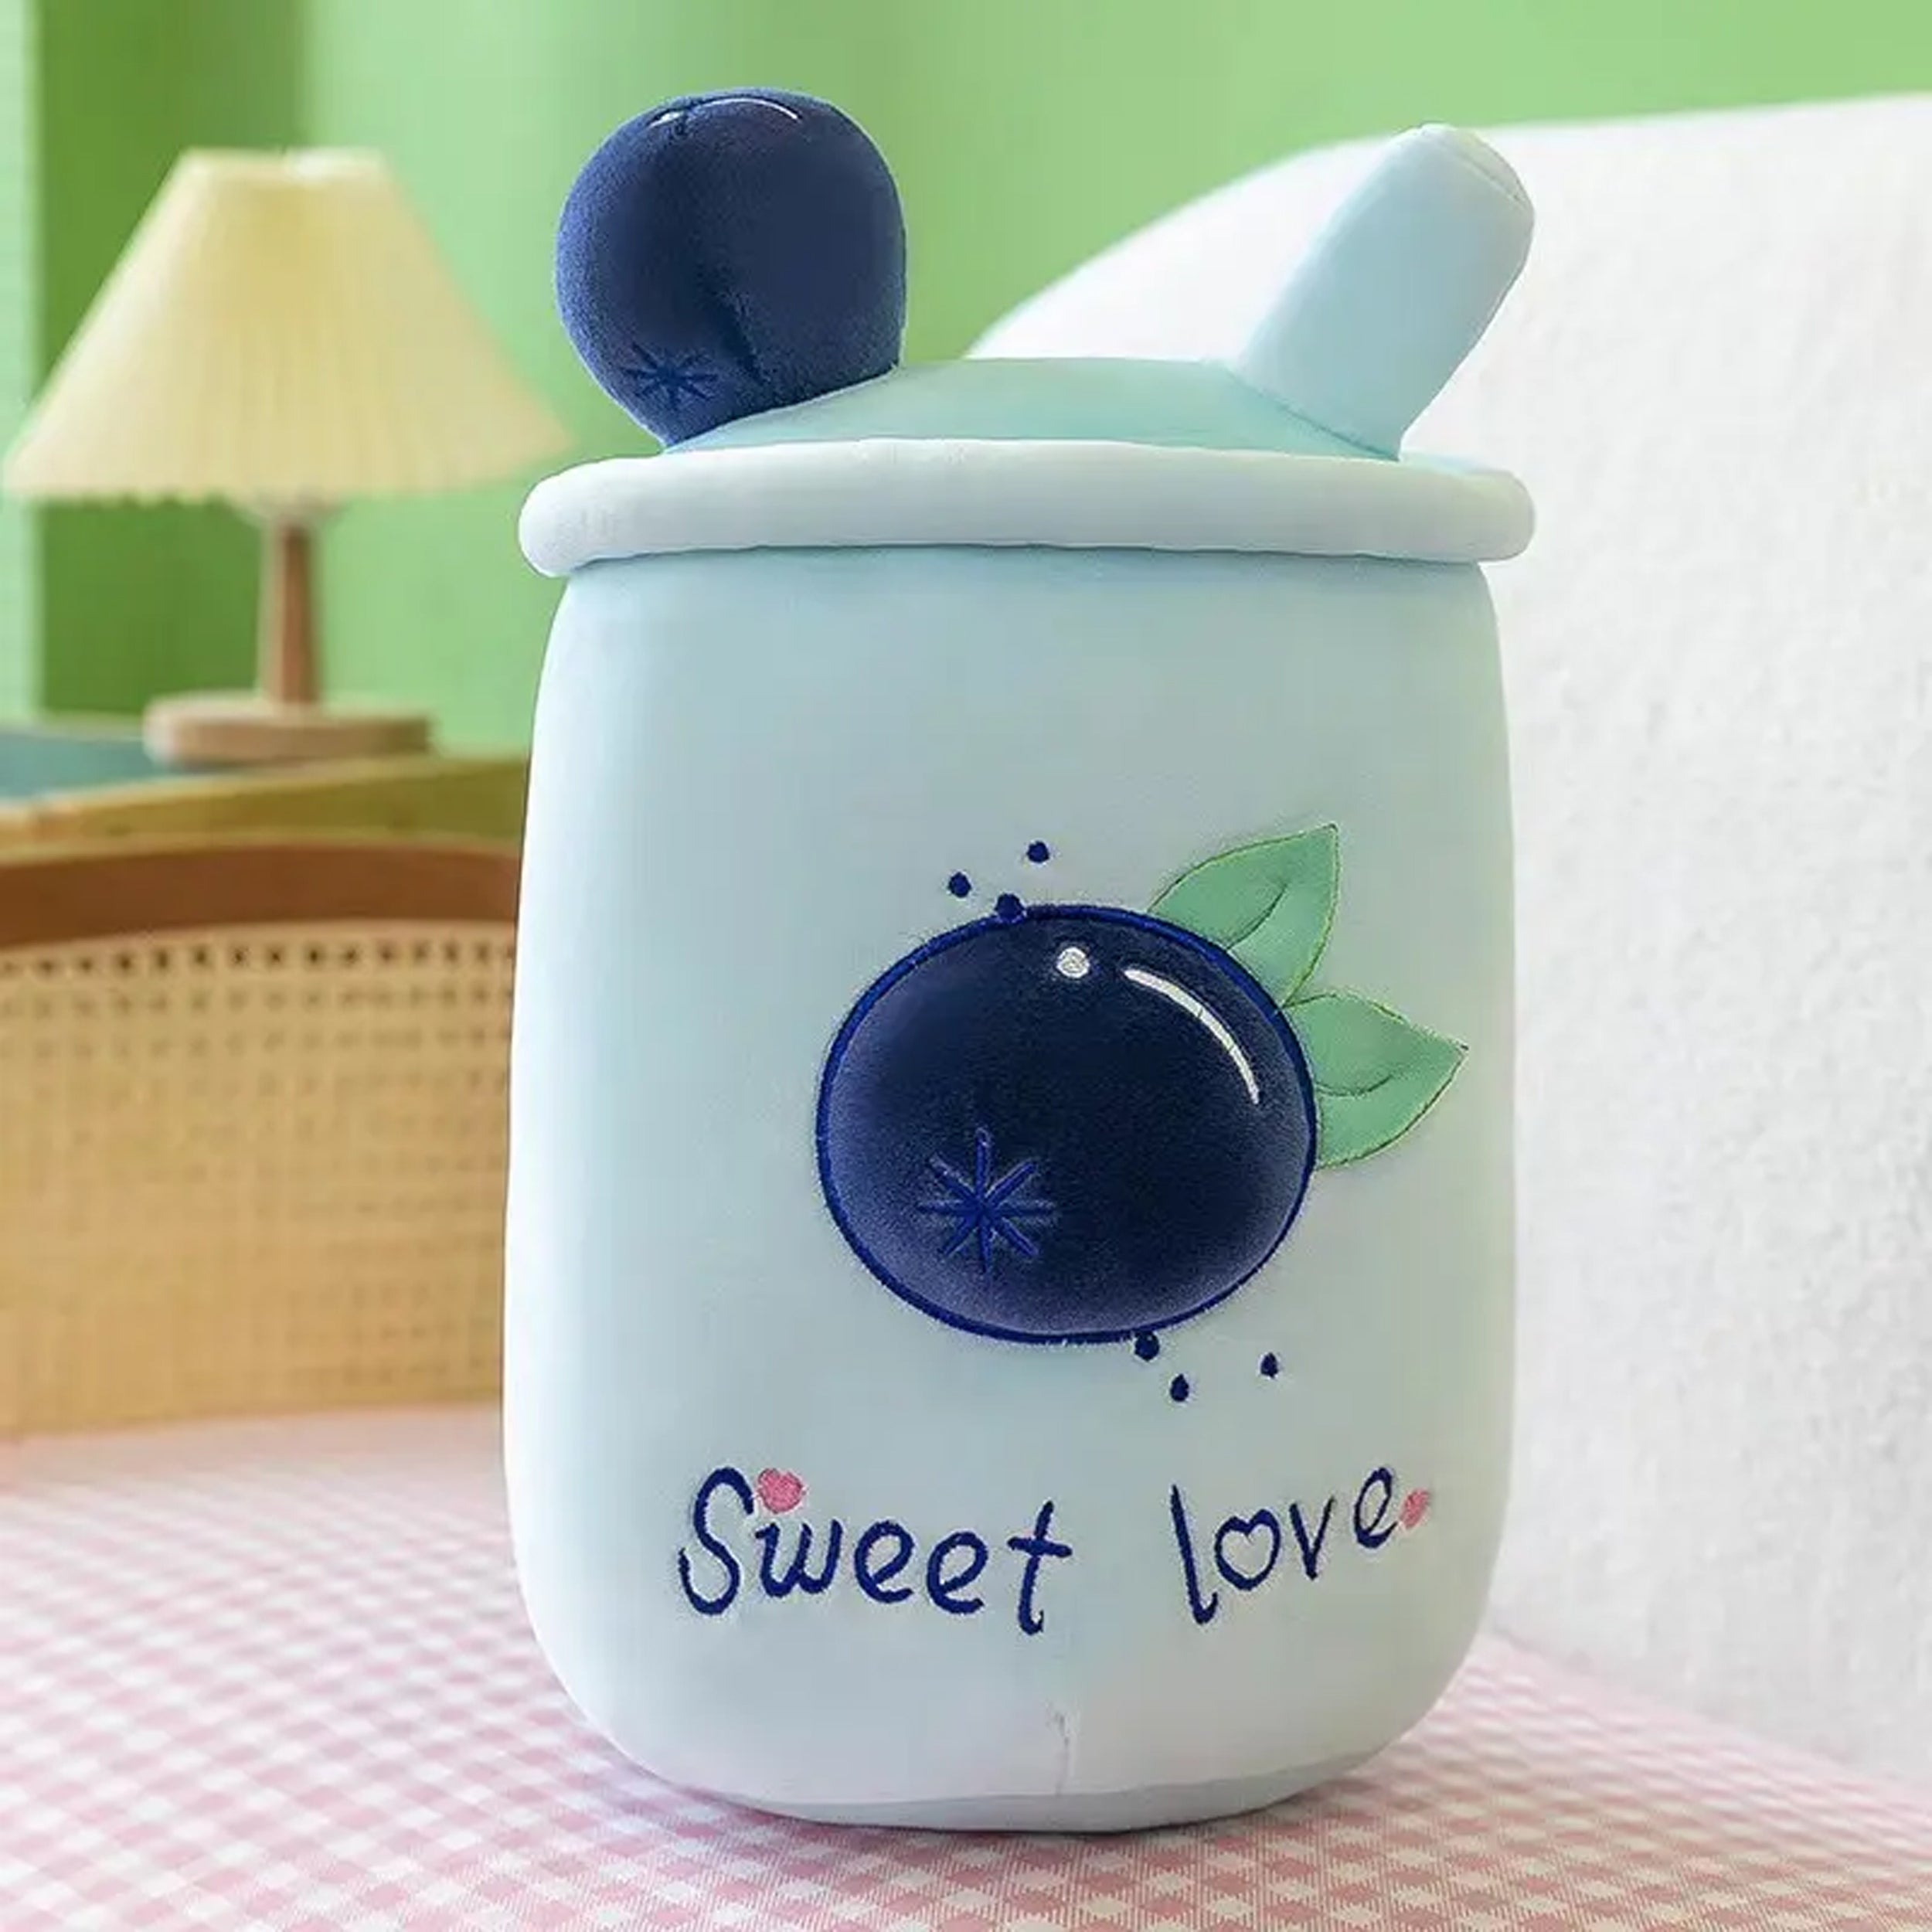 Cute and Cuddly Milk Tea Boba Watermelon Blueberry Peach Plush Pillow Décor Gift